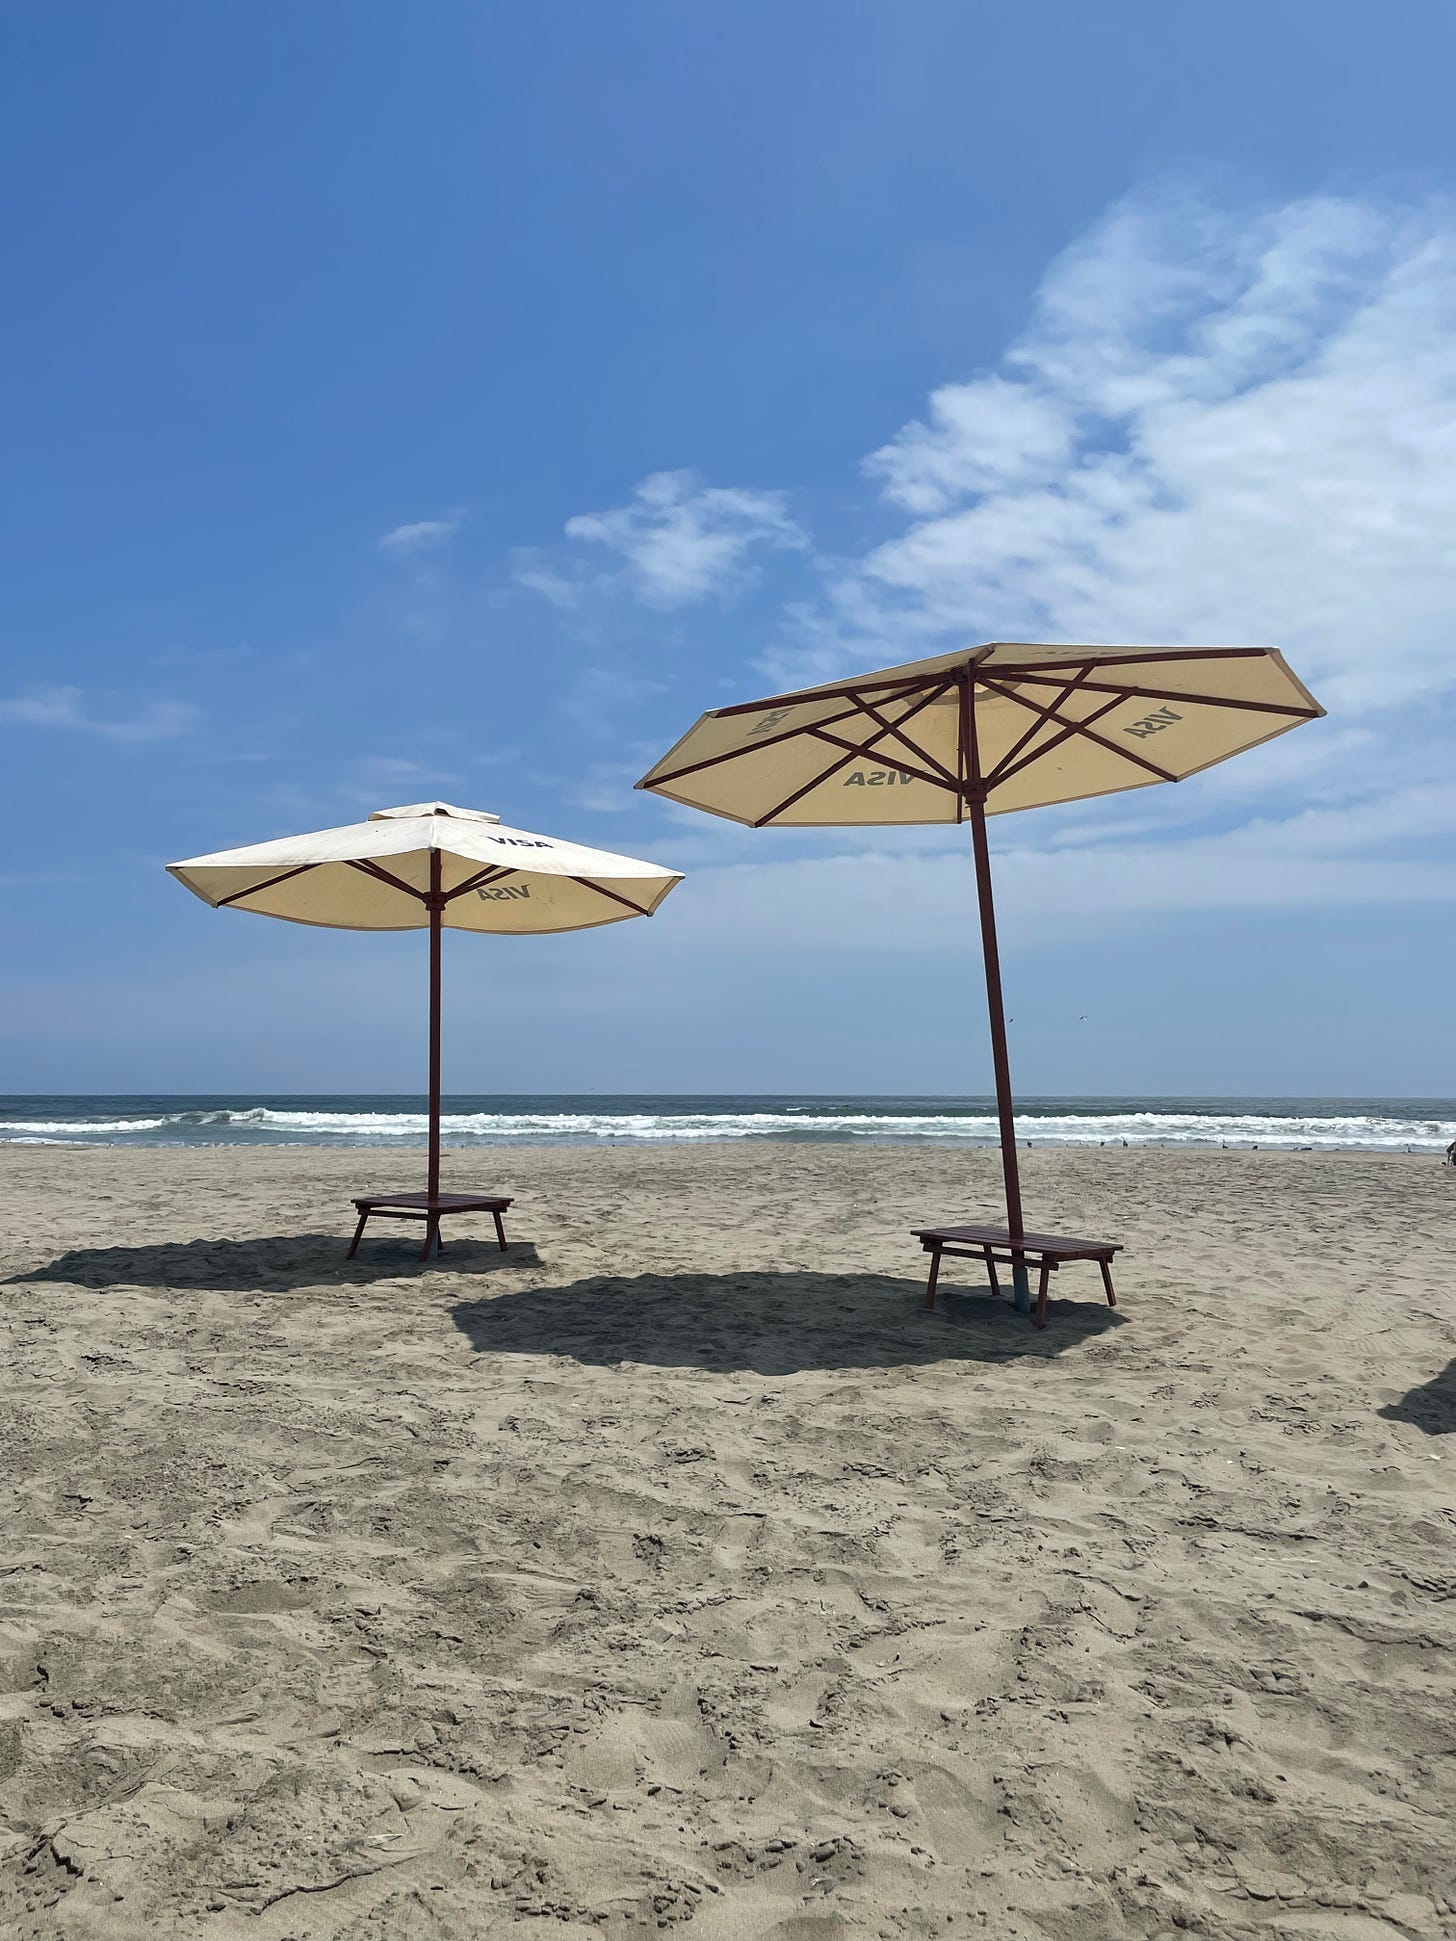 Two beach umbrellas on a sandy beach in Peru's coast